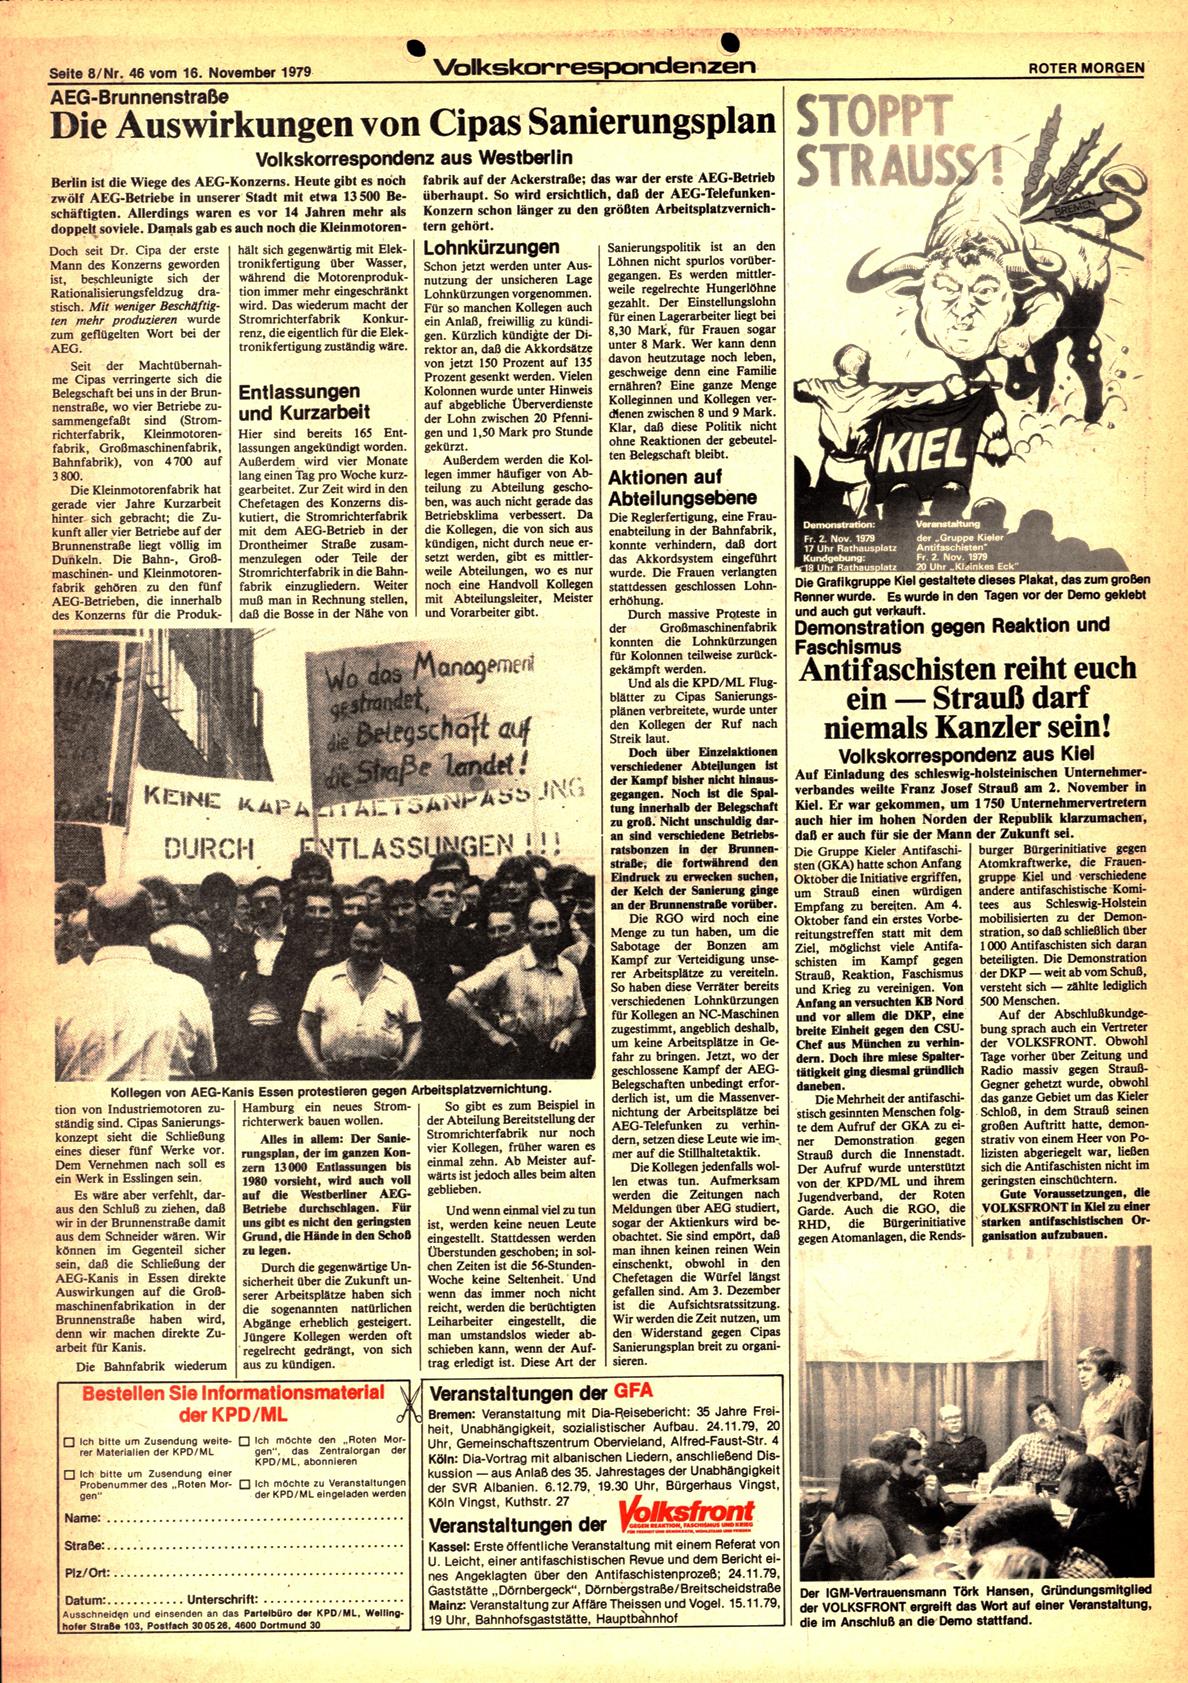 Roter Morgen, 13. Jg., 16. November 1979, Nr. 46, Seite 8